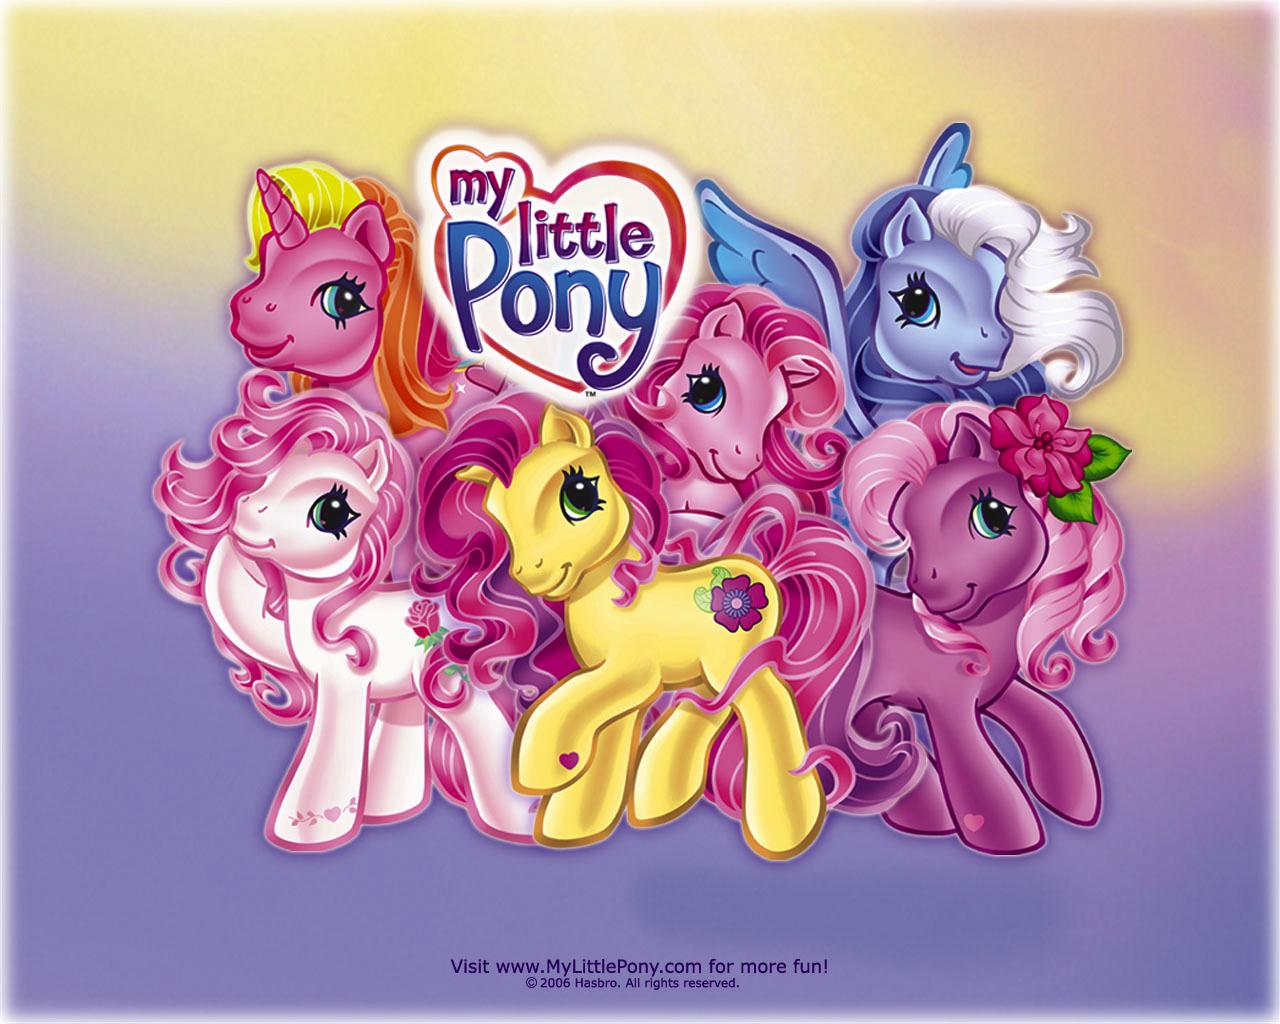 http://images.fanpop.com/images/image_uploads/My-Little-Pony-my-little-pony-256752_1280_1024.jpg